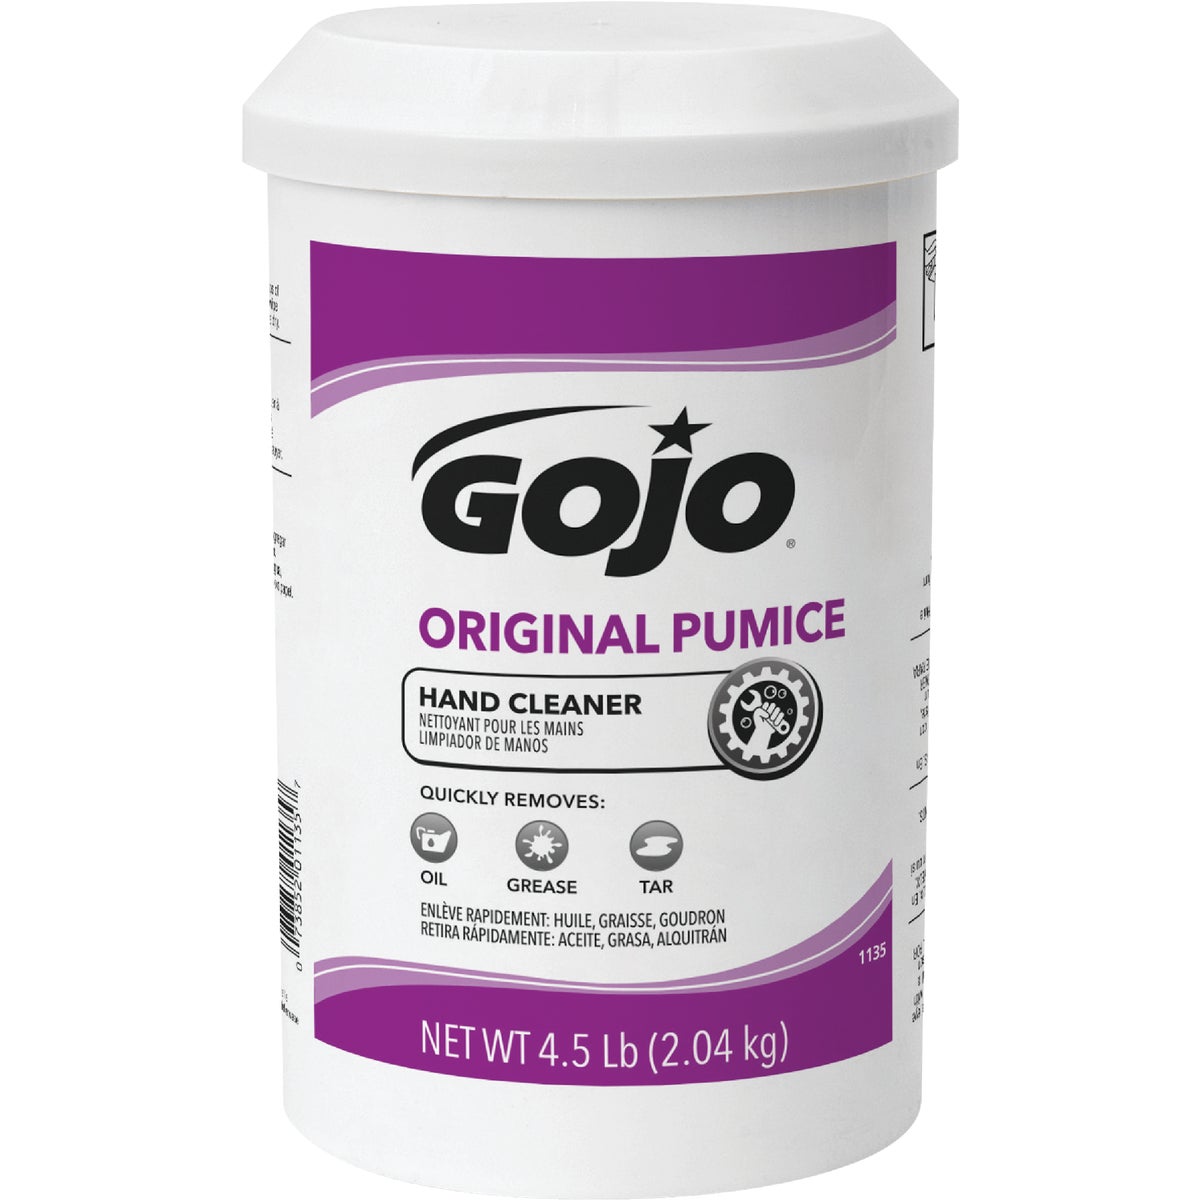 GOJO Original Pumice 4.5 Lb. Crme-Style Hand Cleaner